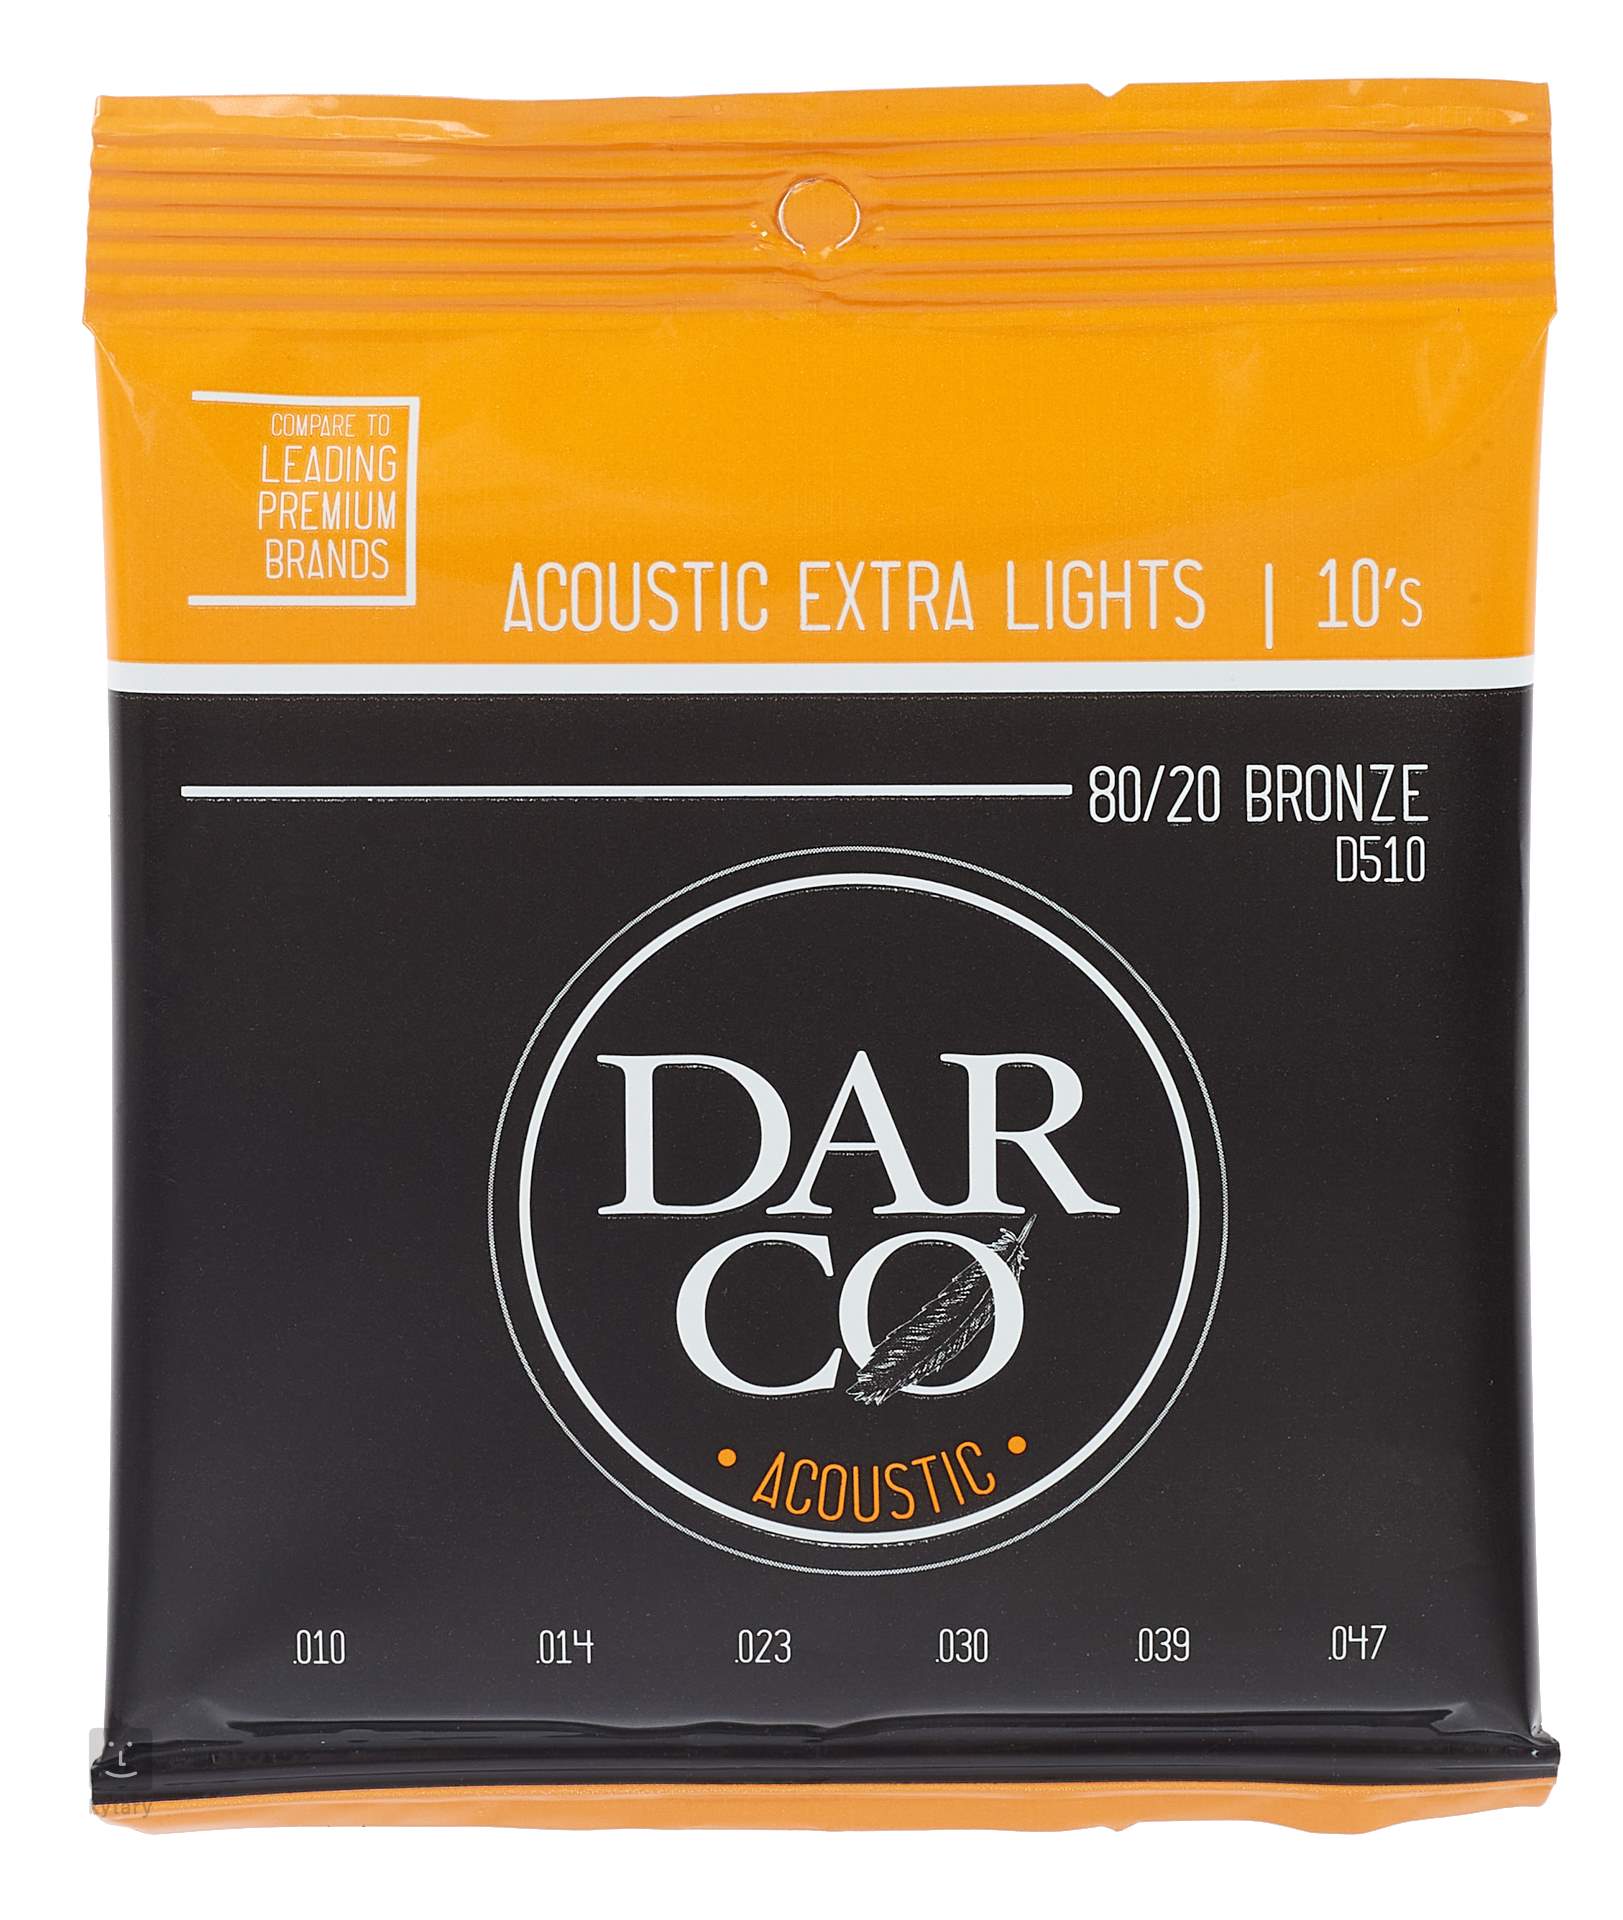 Darco acoustic D510 bronze extra light